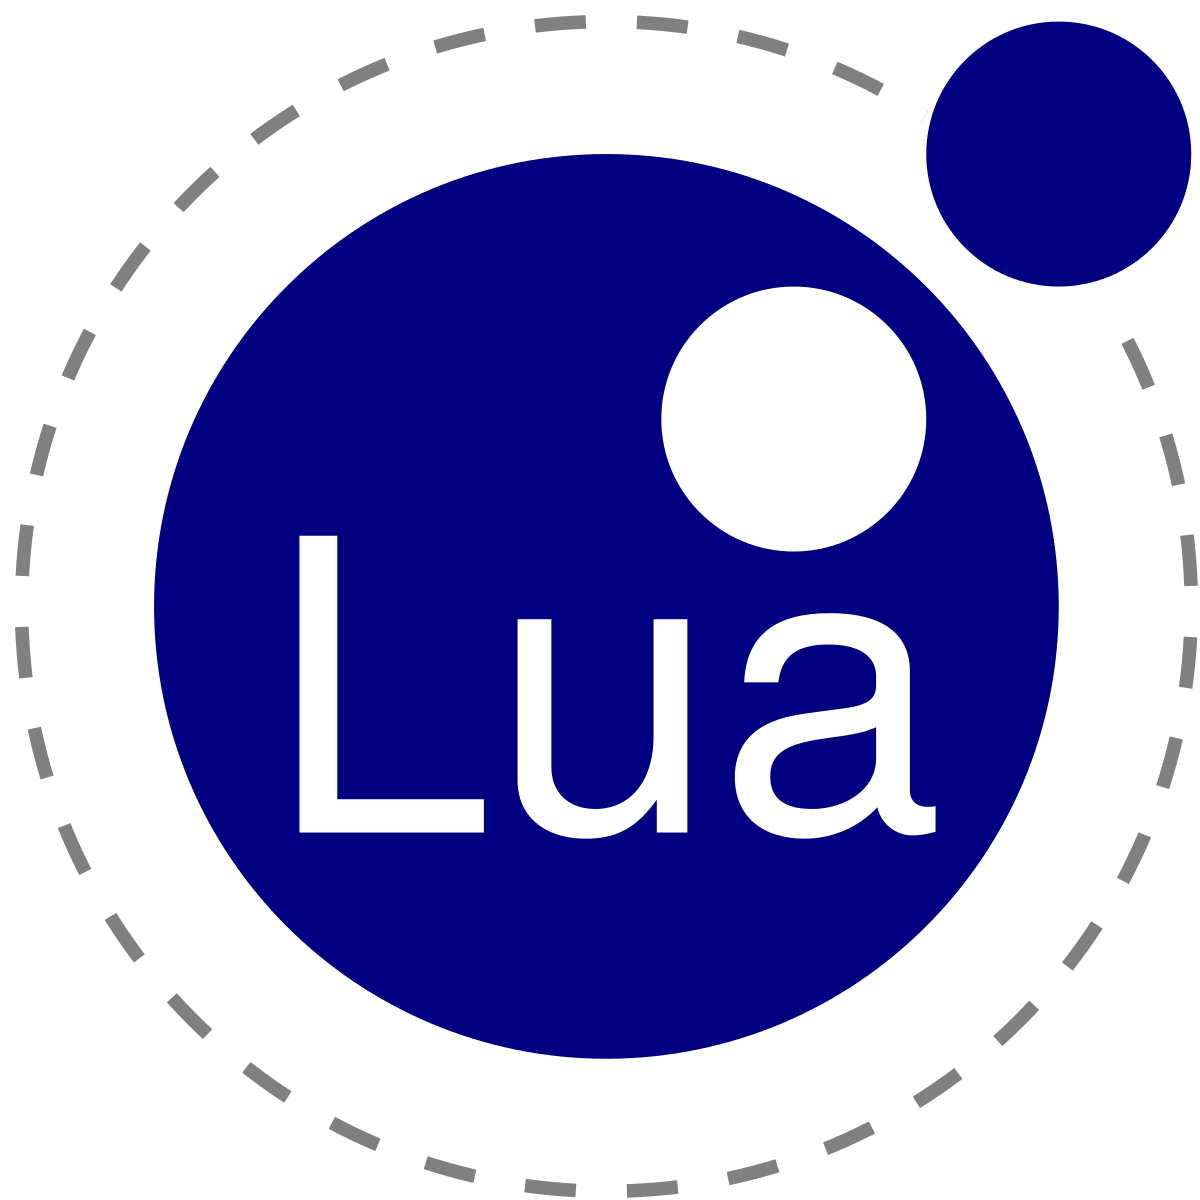 Lua Code Studio